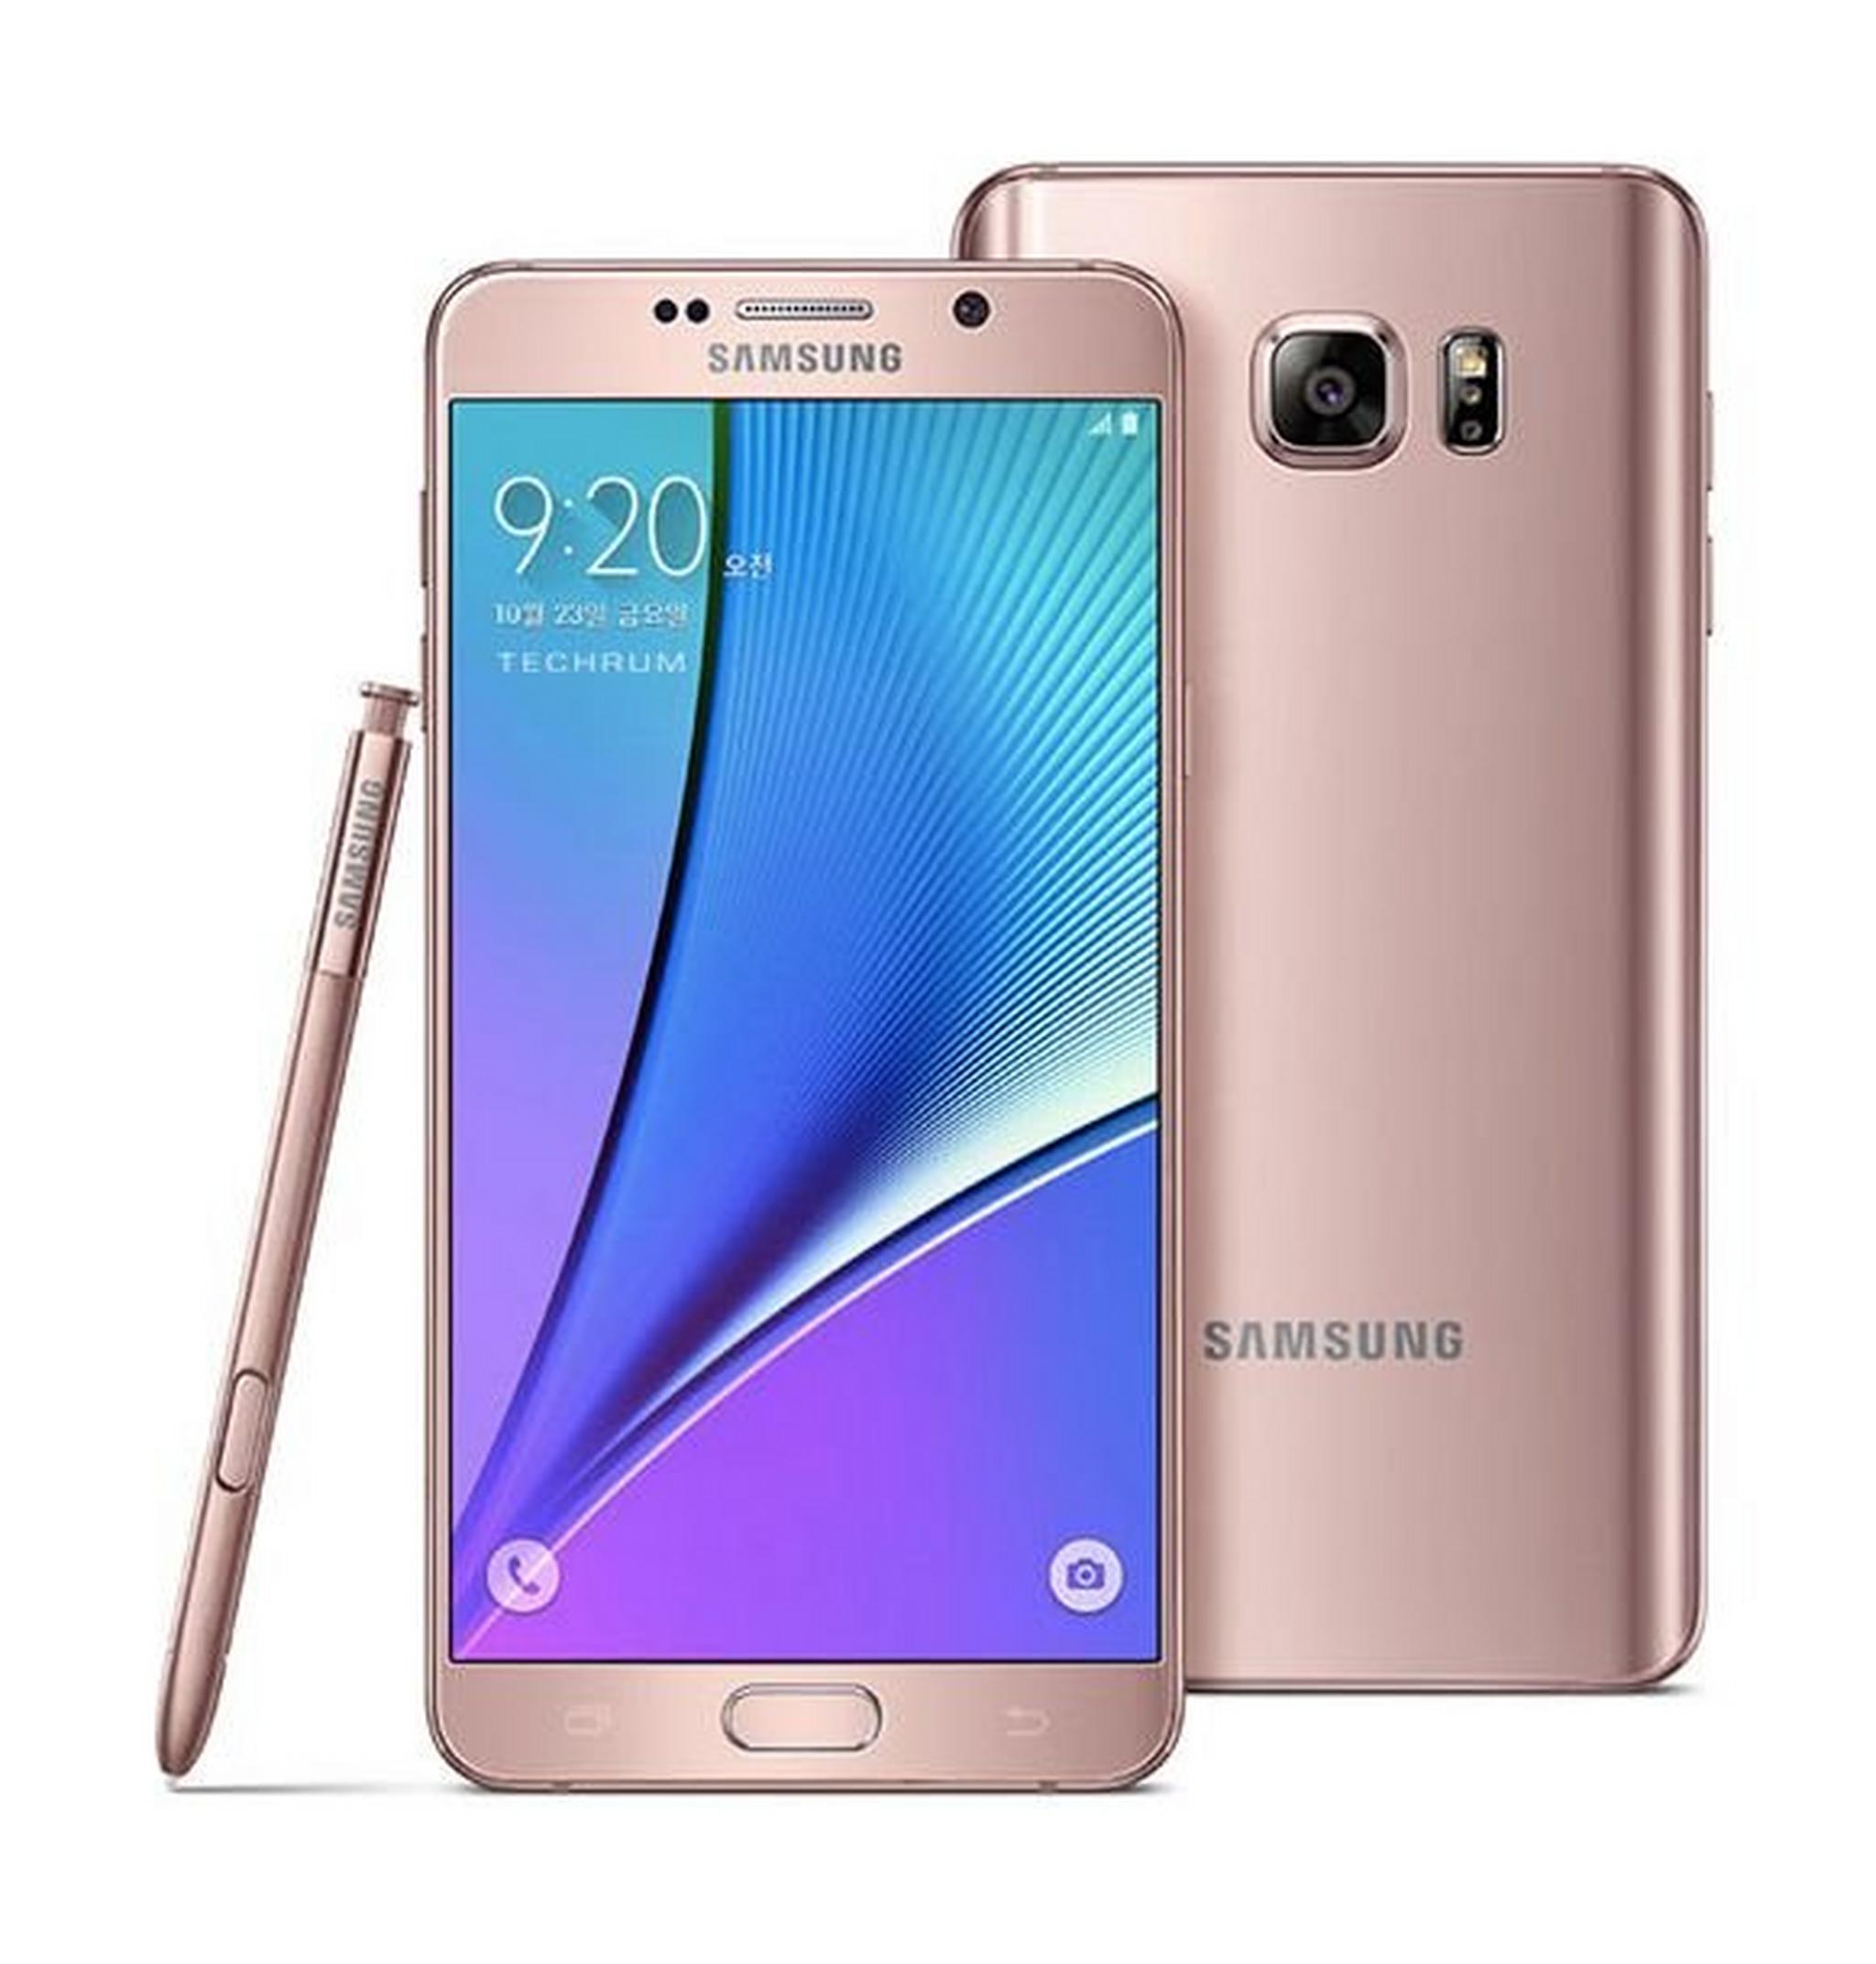 Samsung Galaxy Note 5 32GB 16MP 4G LTE 5.7-inch Smartphone - Pink/Gold